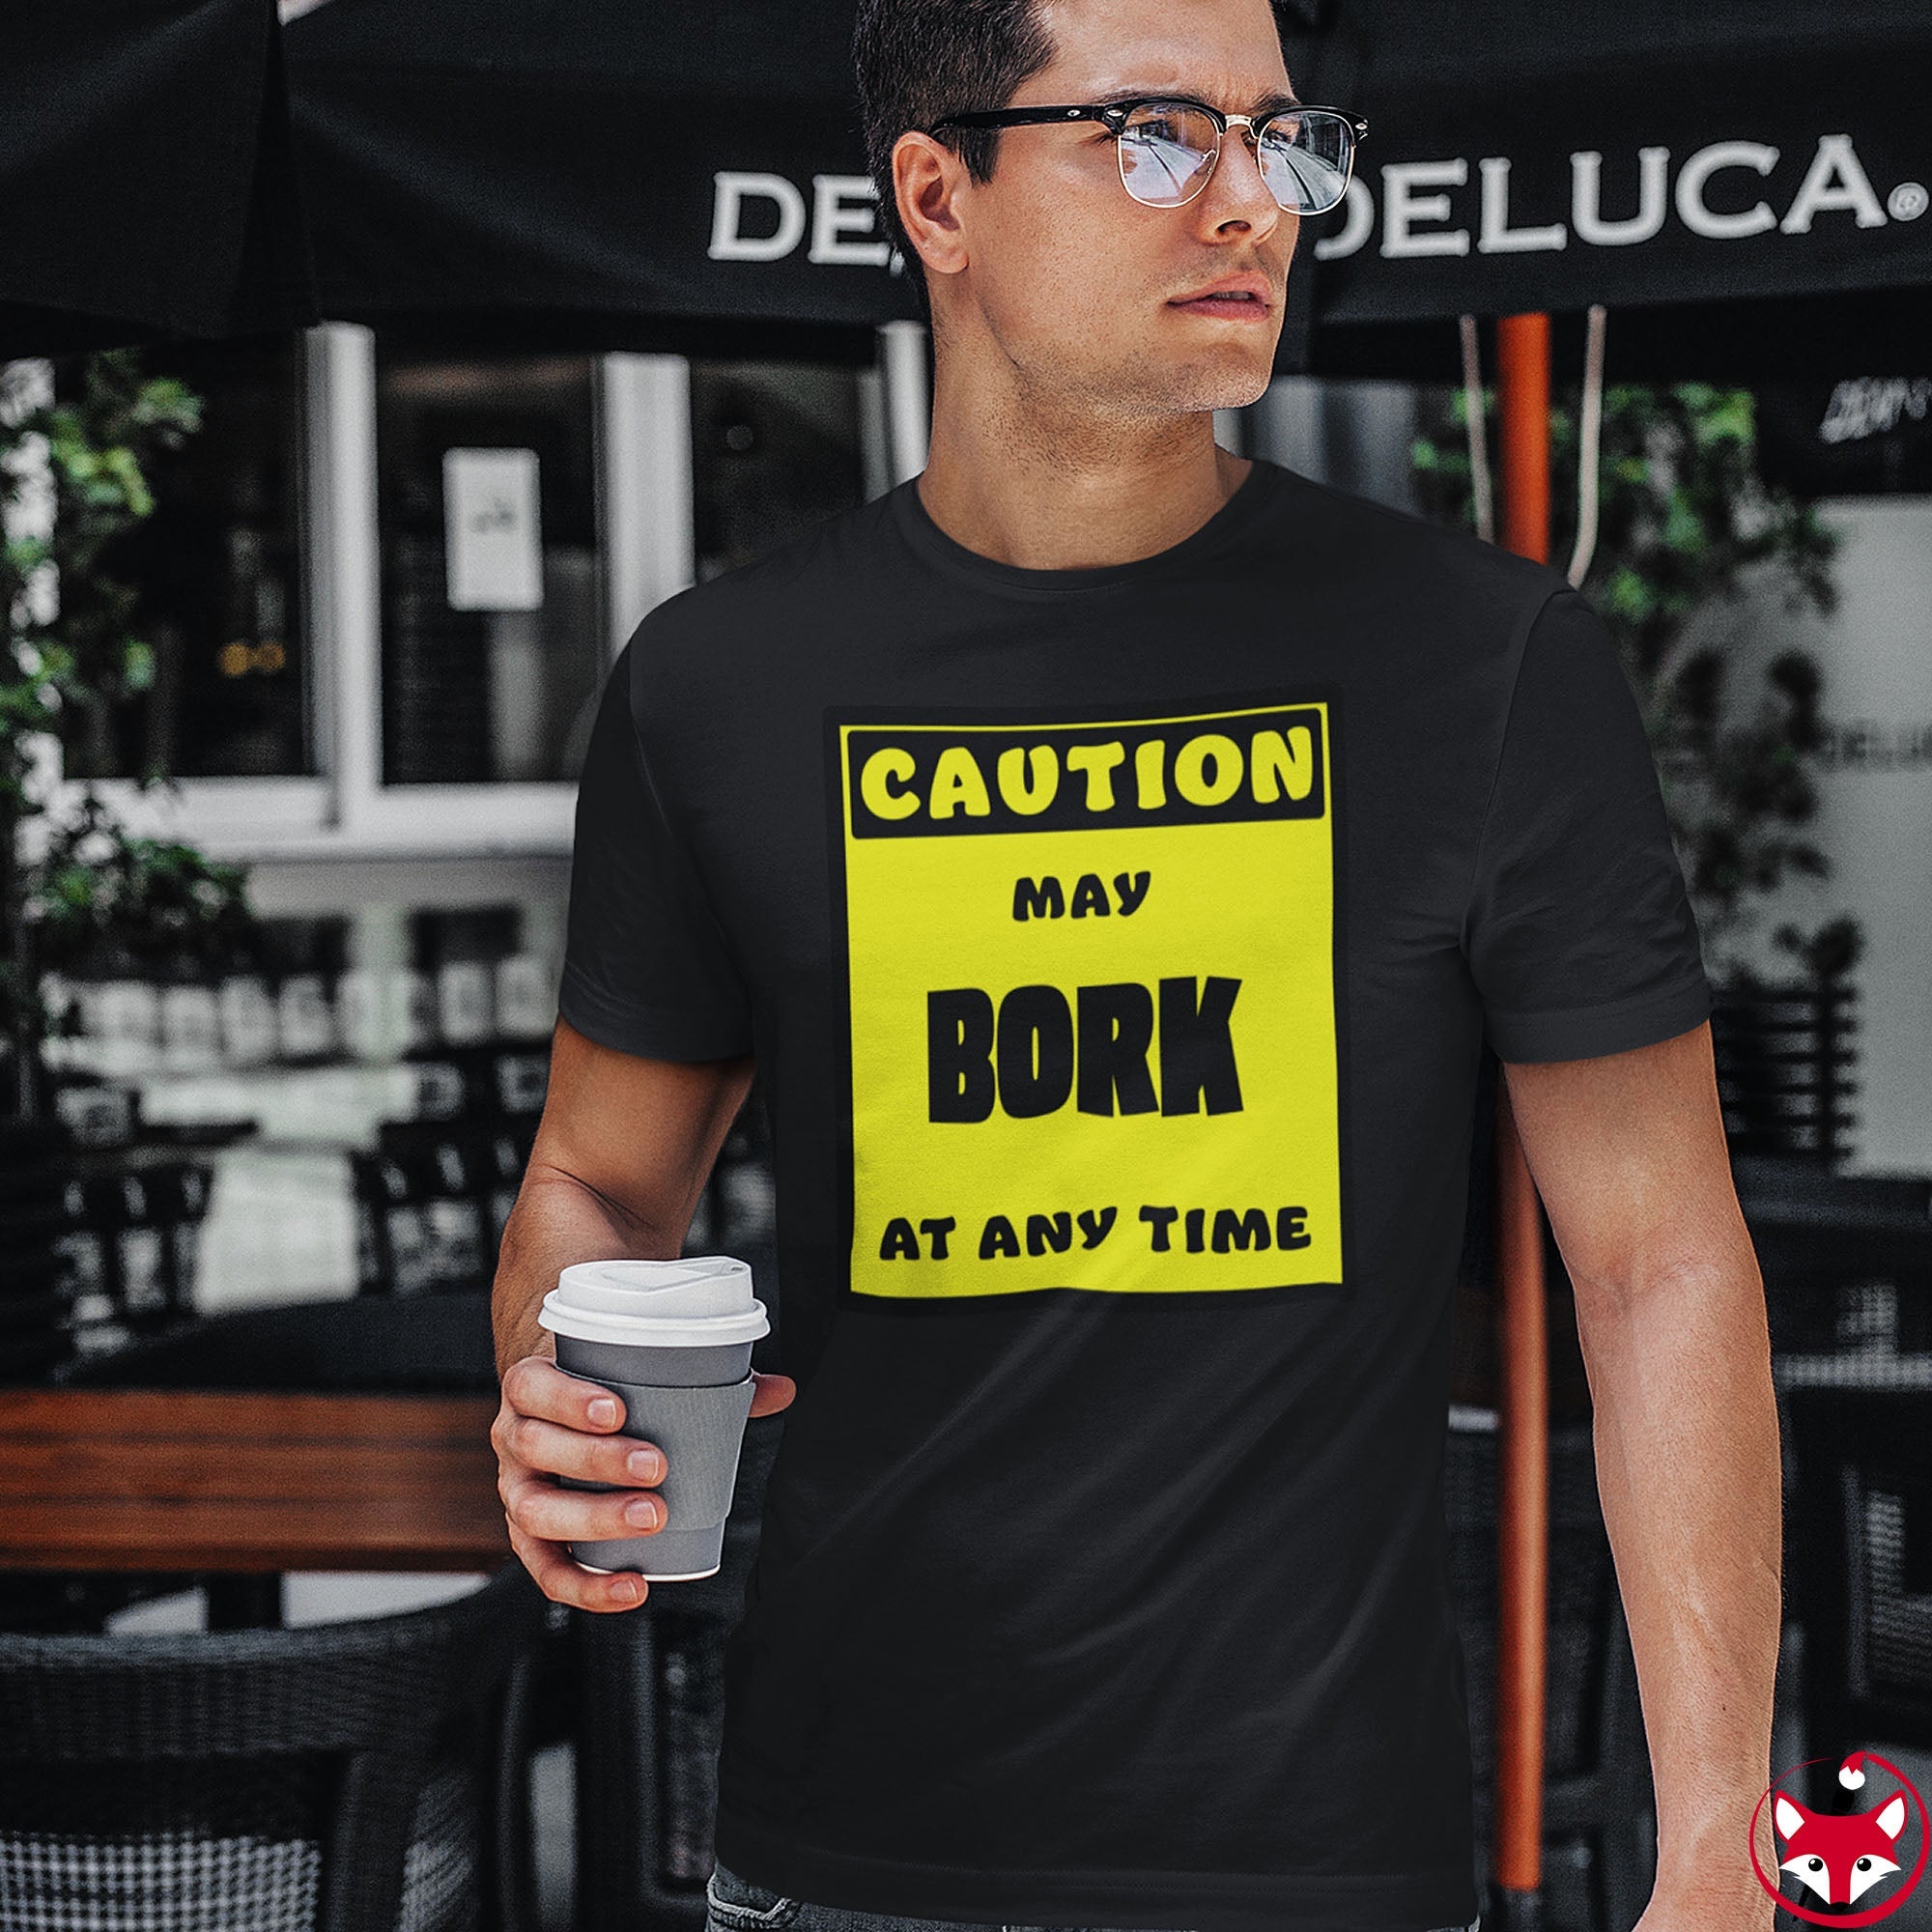 CAUTION! May BORK at any time! - T-Shirt T-Shirt AFLT-Whootorca 